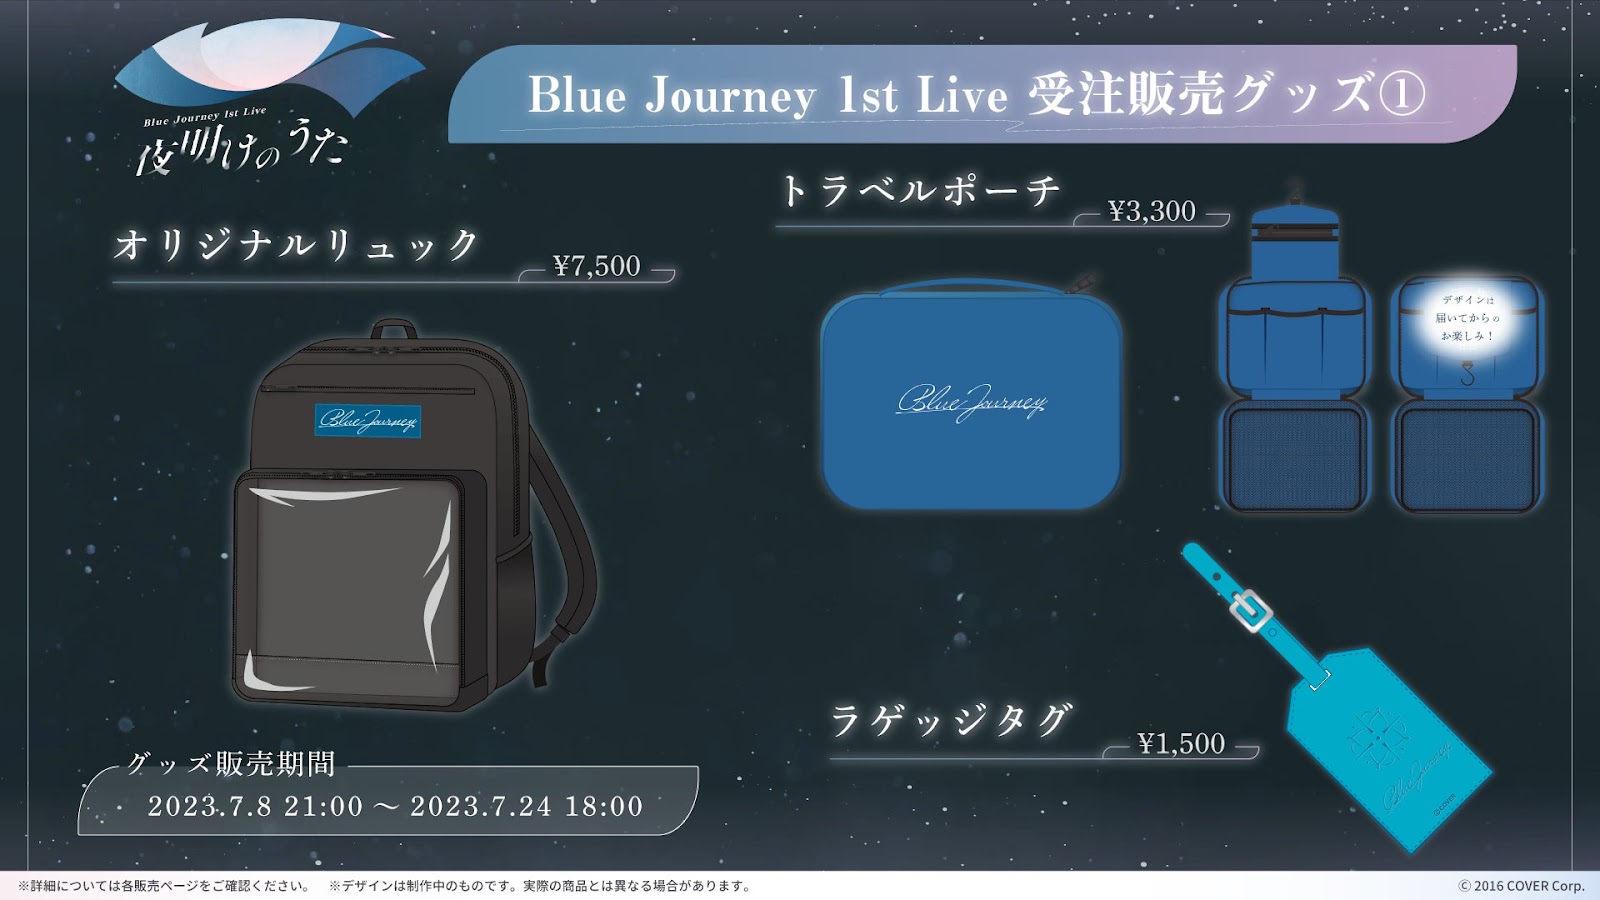 Blue Journey 1st Live  夜明けのうた オリジナルリュック物を減らすために出品いたします